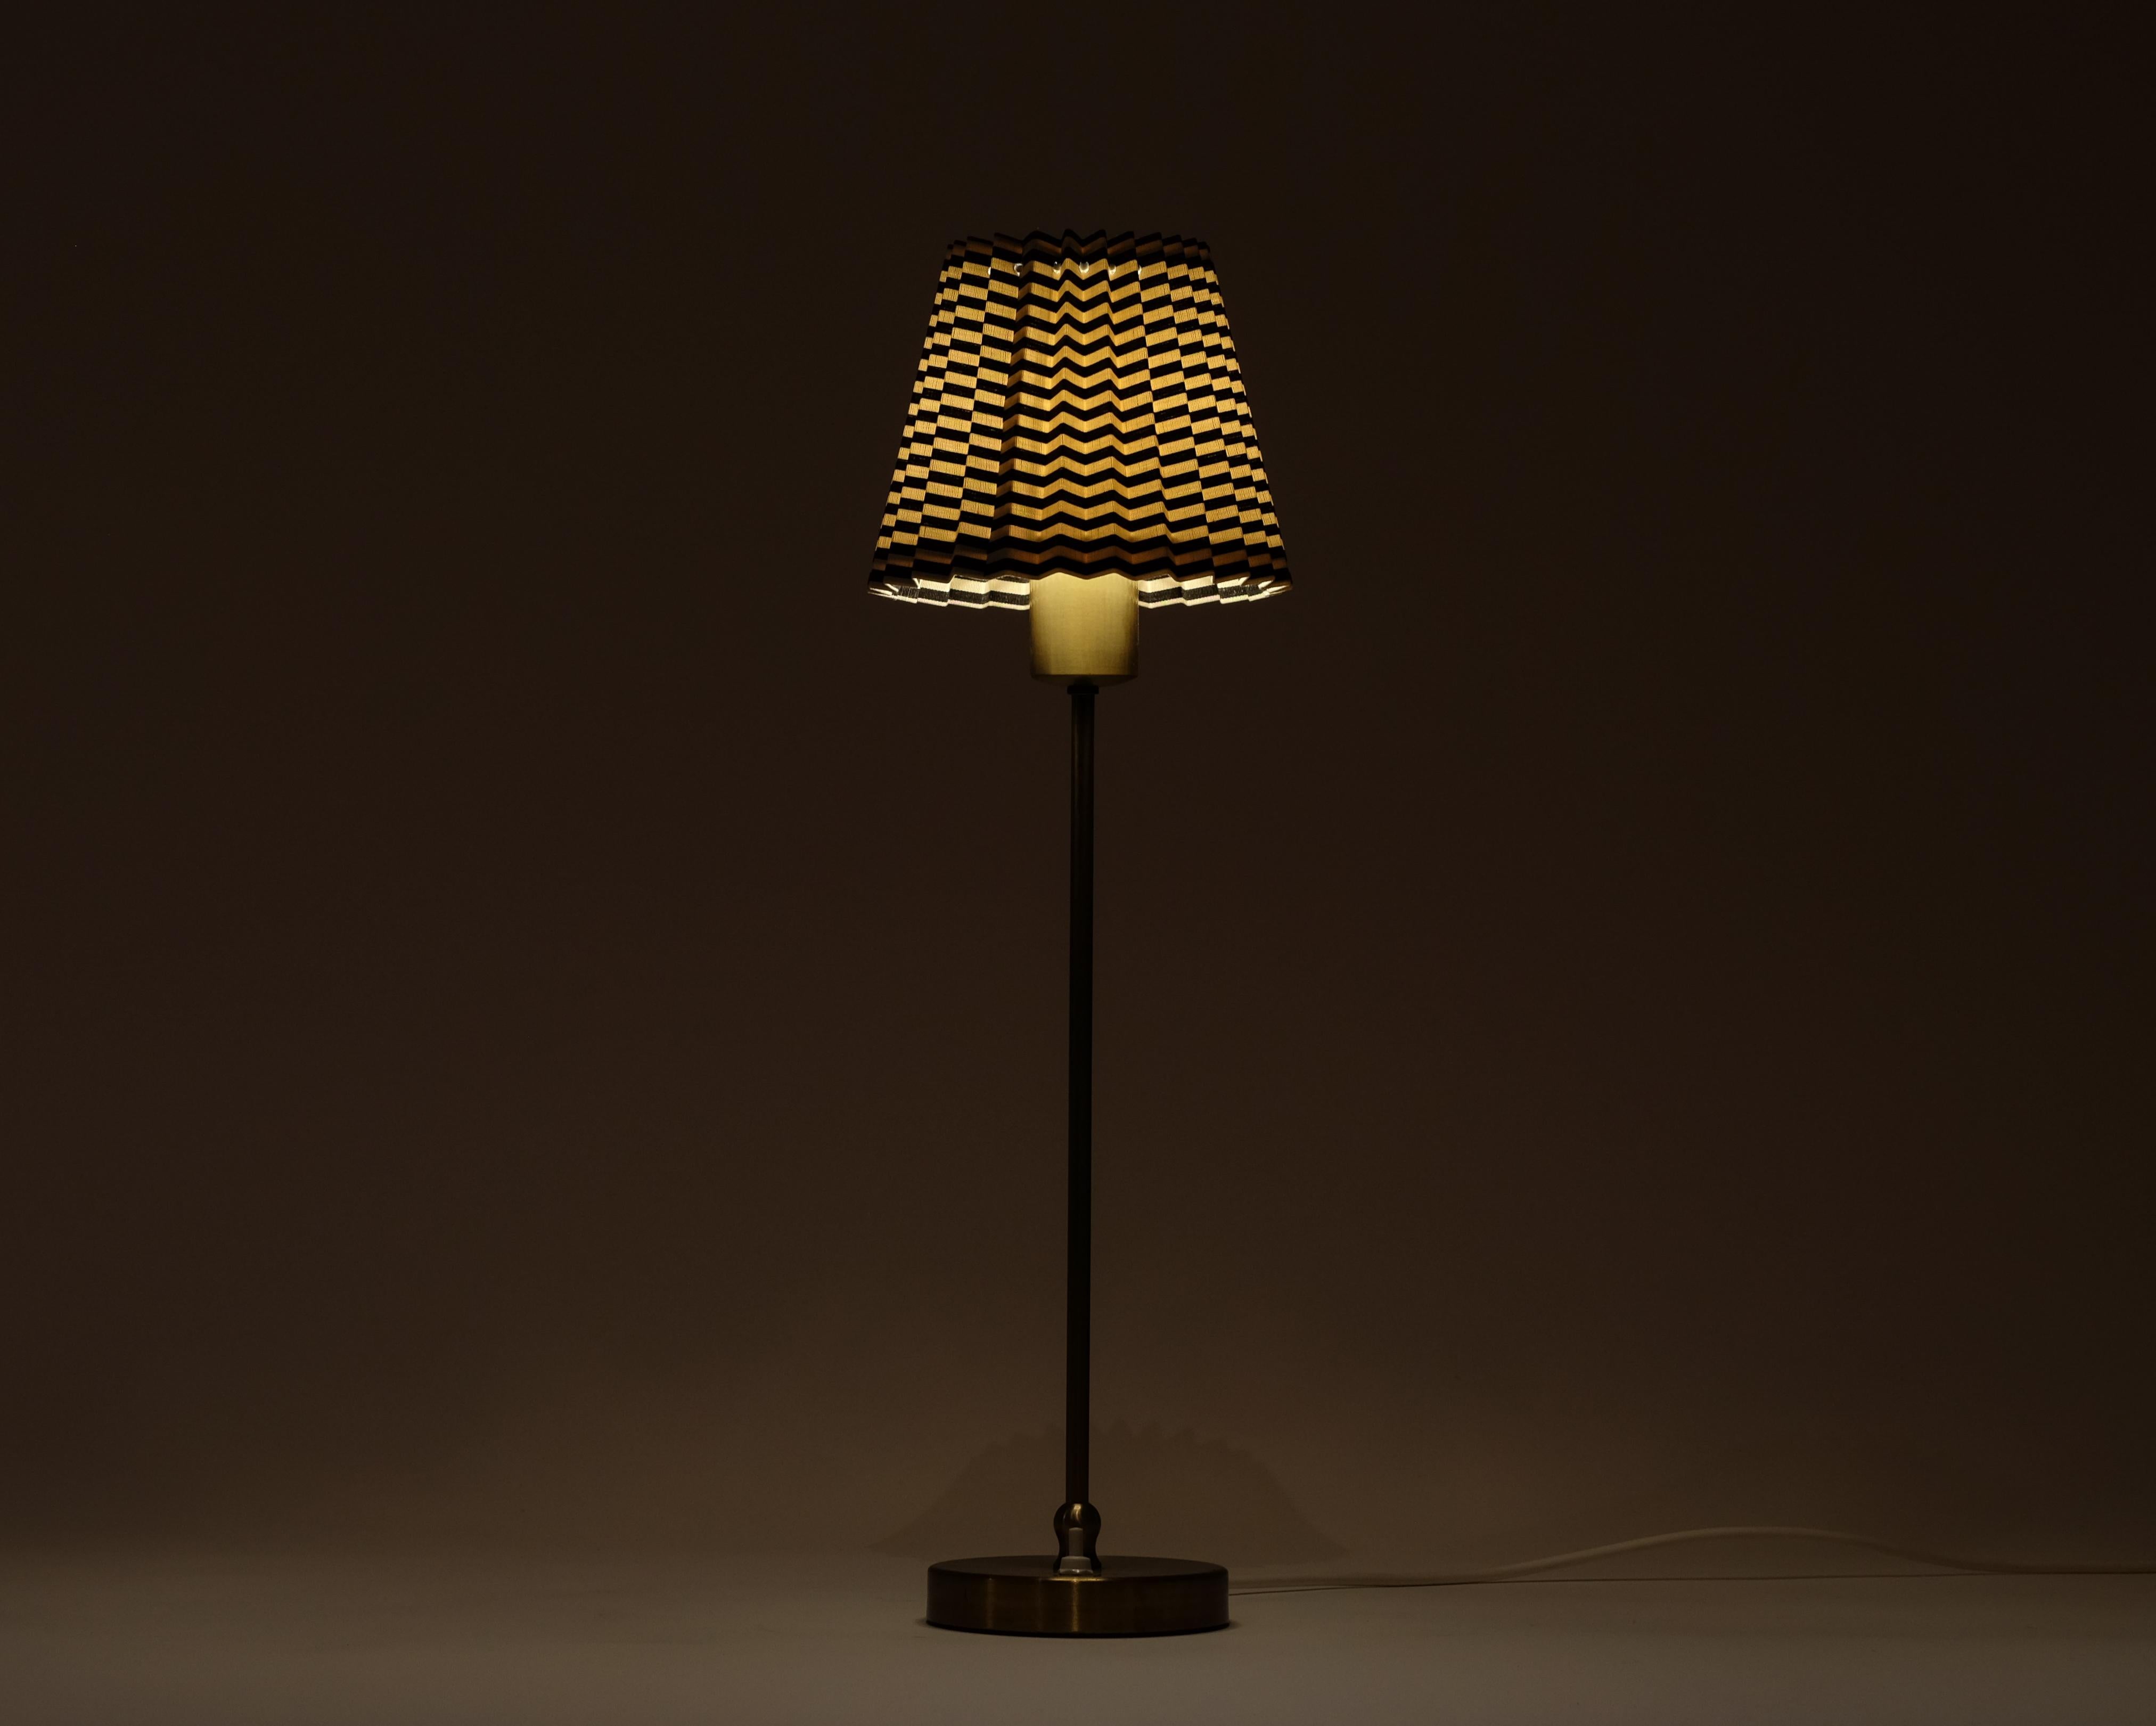 Designed by Josef Frank. New original Svenskt tenn lampshade.